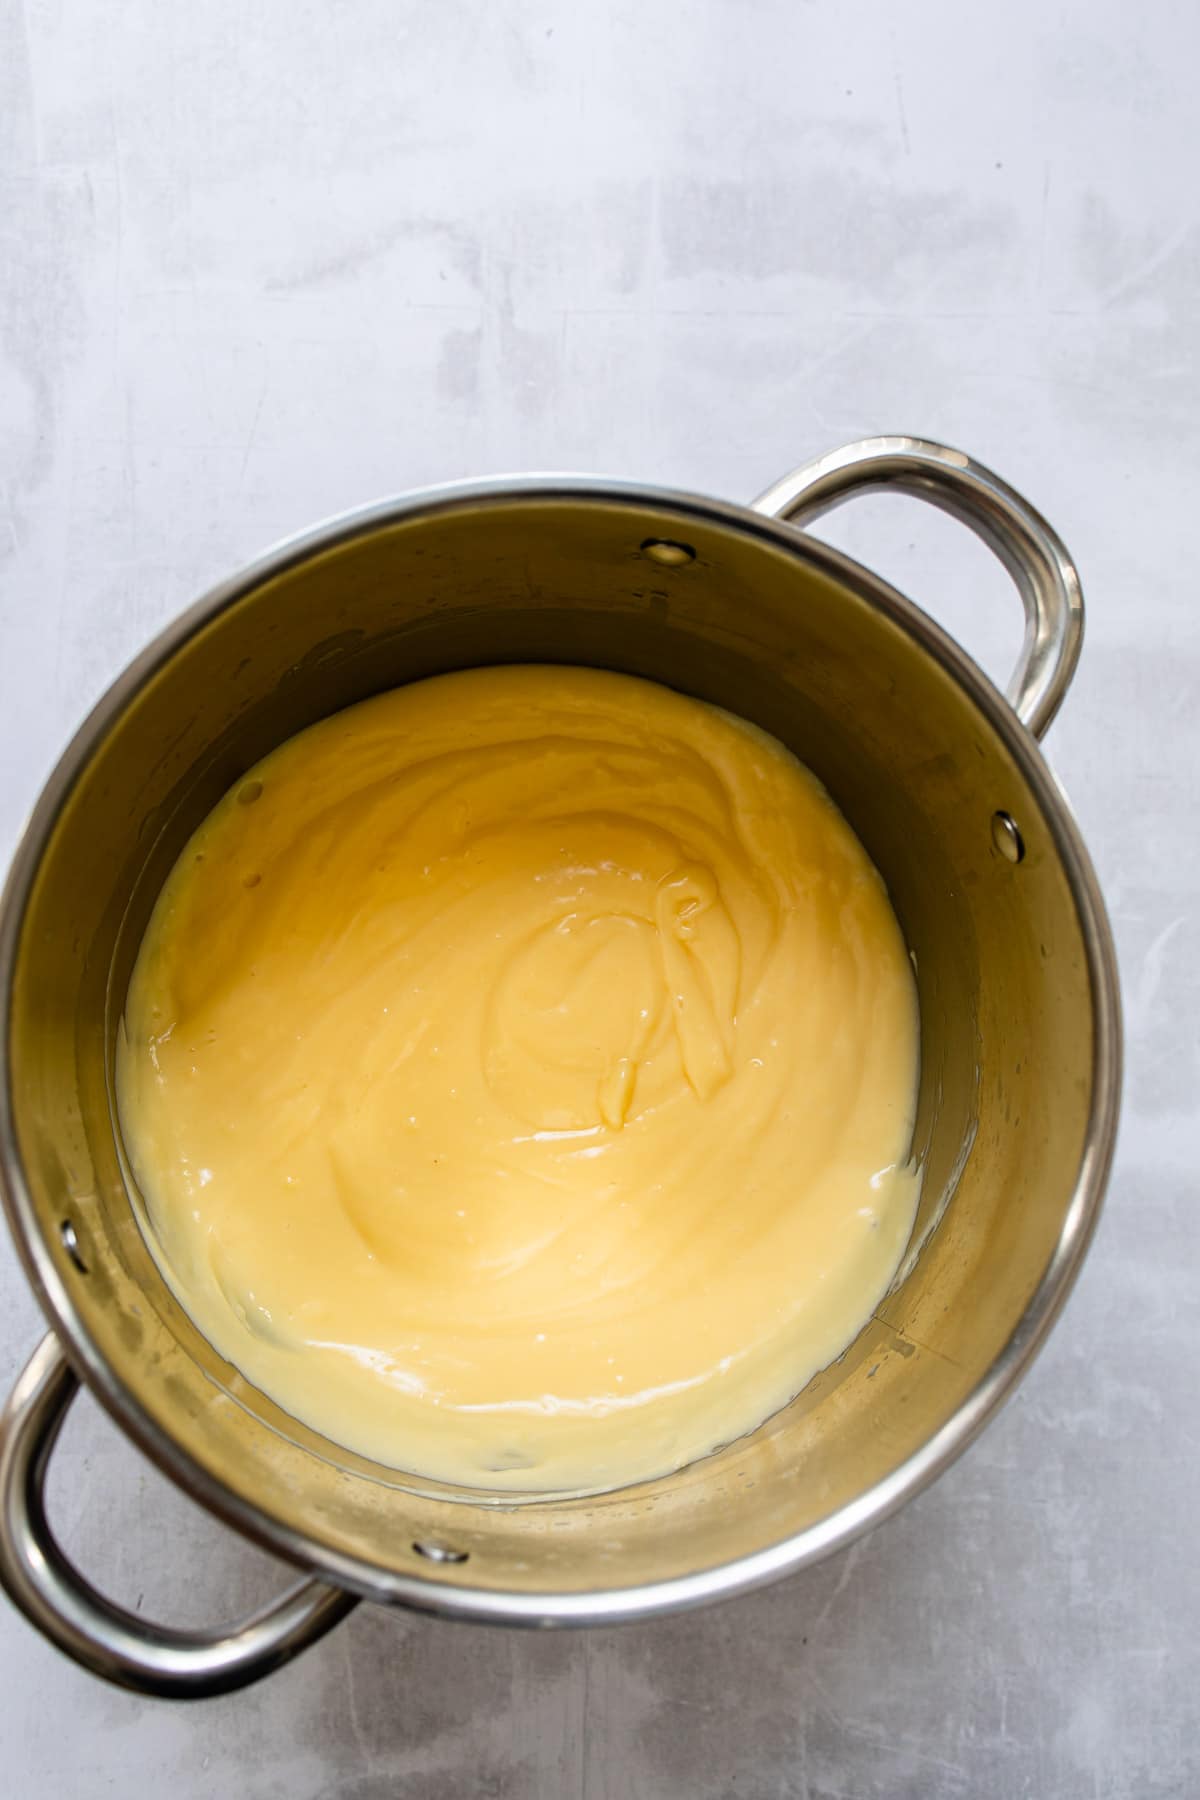 Pastry cream in a saucepan. 